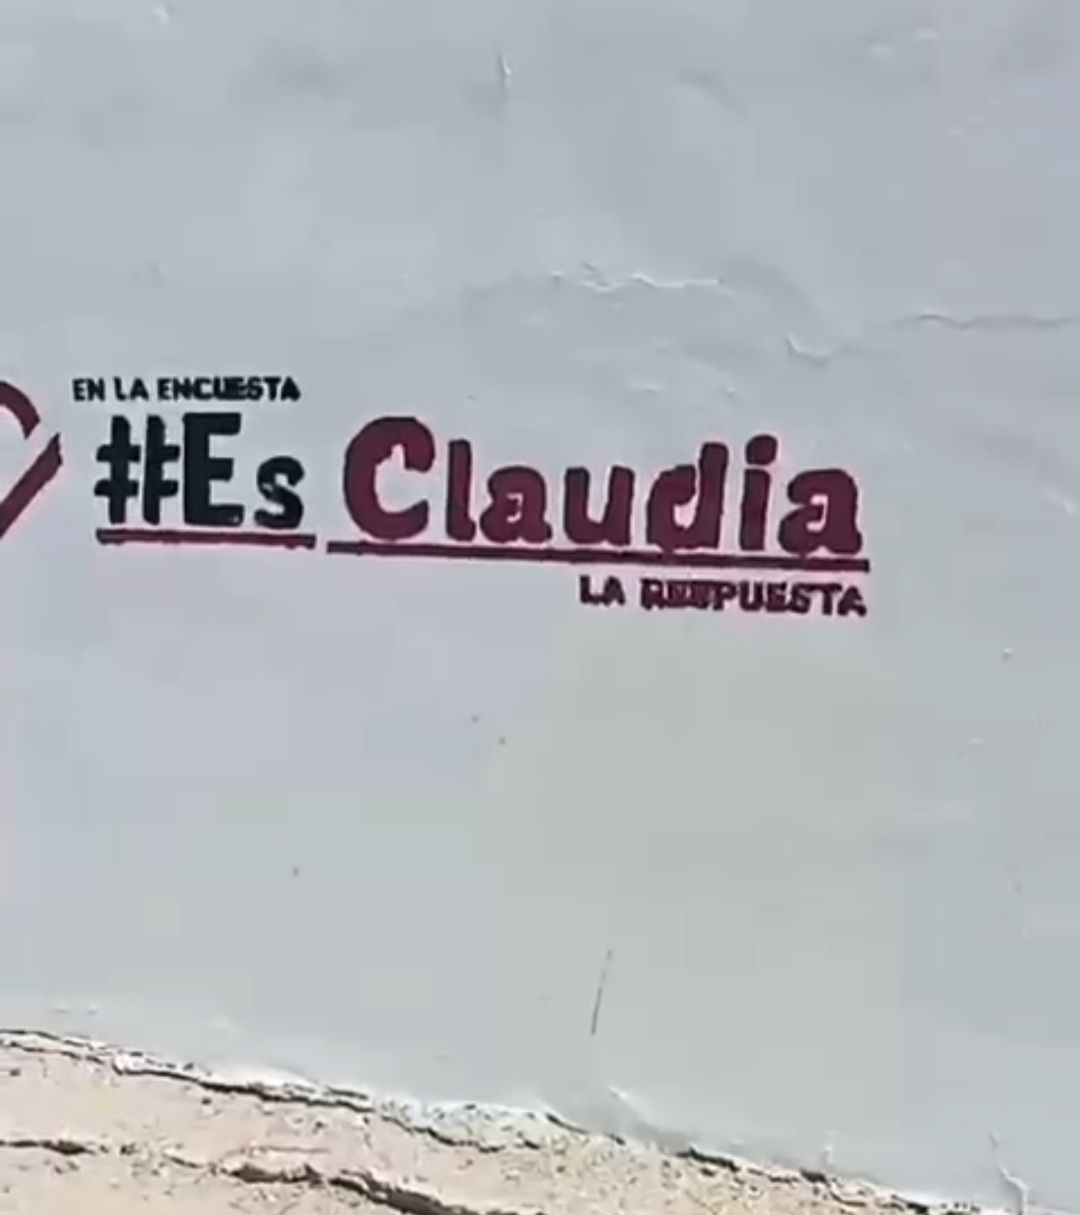 CAUSA MOLESTIA PROMOCIONAL PARTIDISTA EN BARDA DE ESCUELA